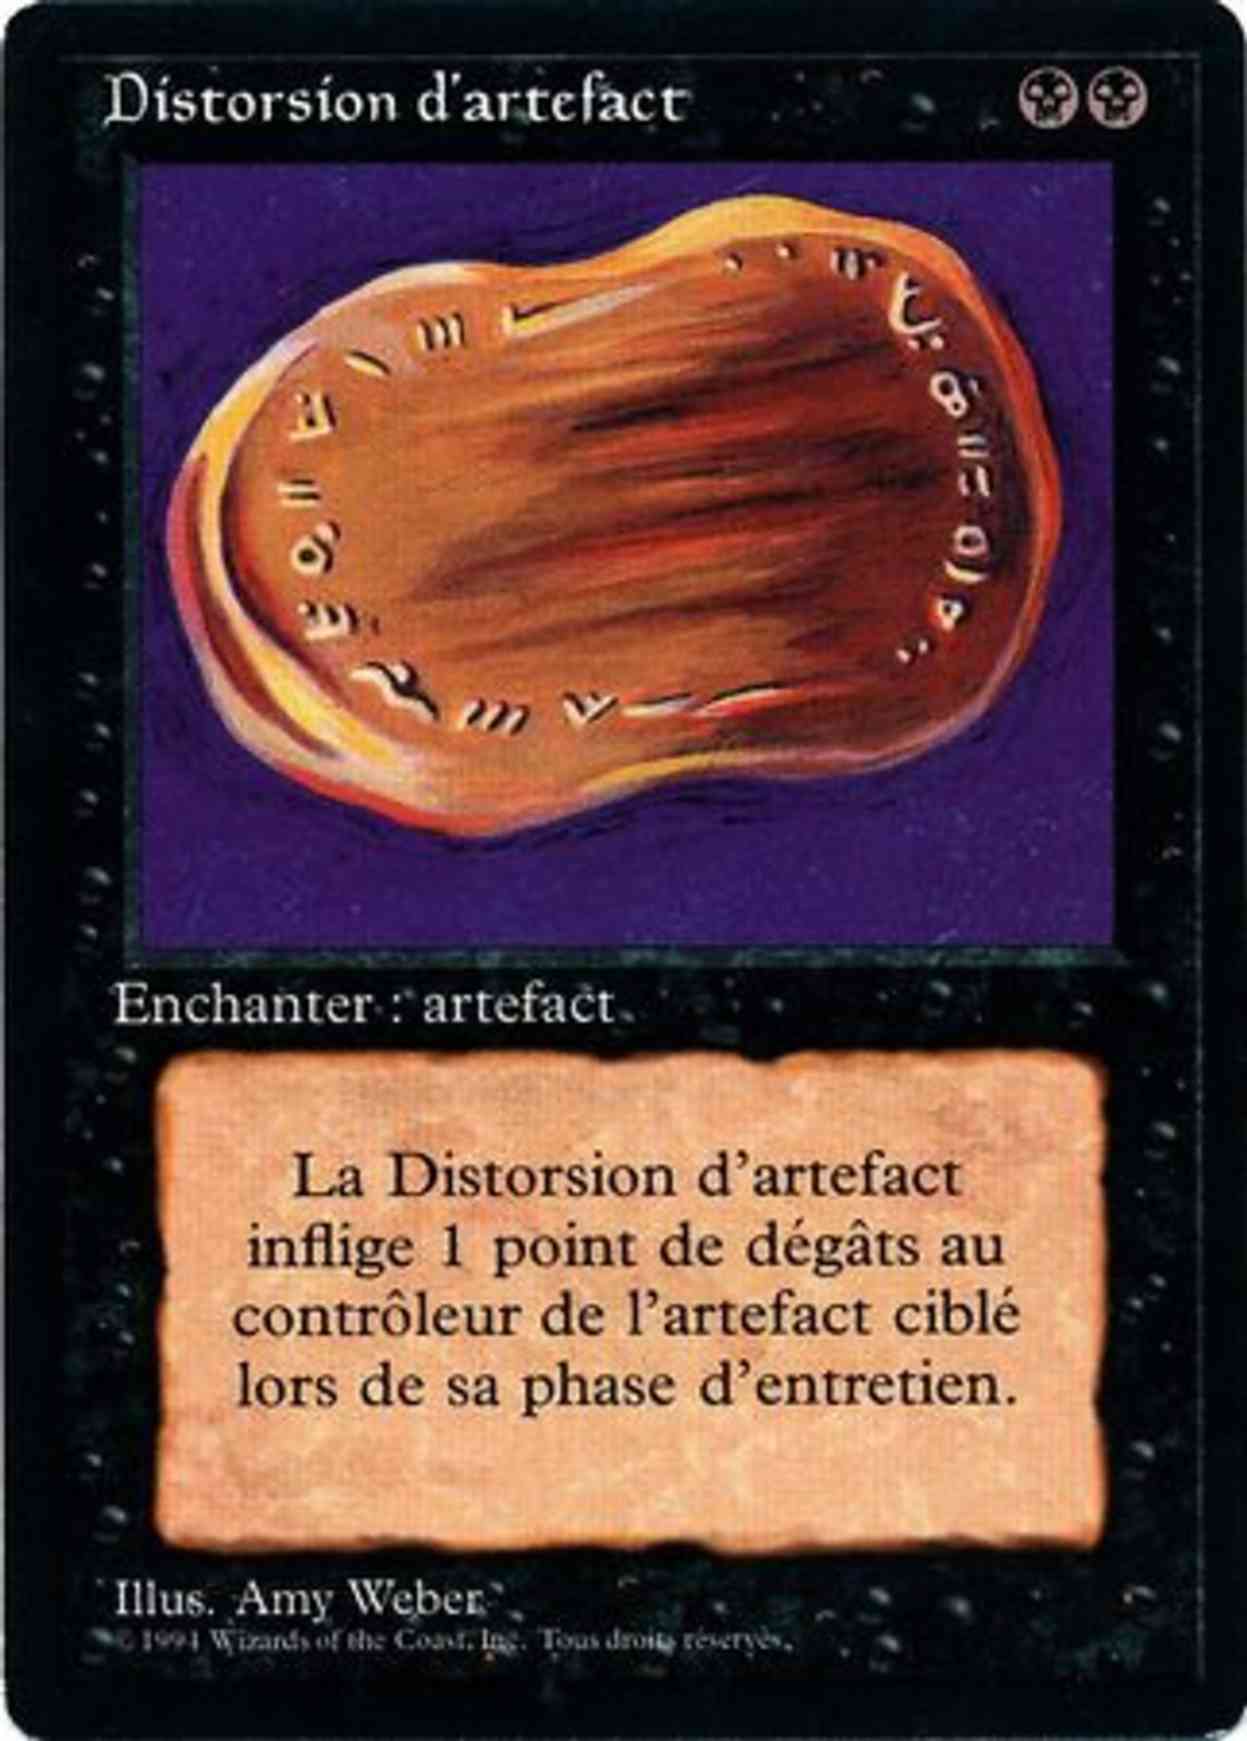 Warp Artifact magic card front